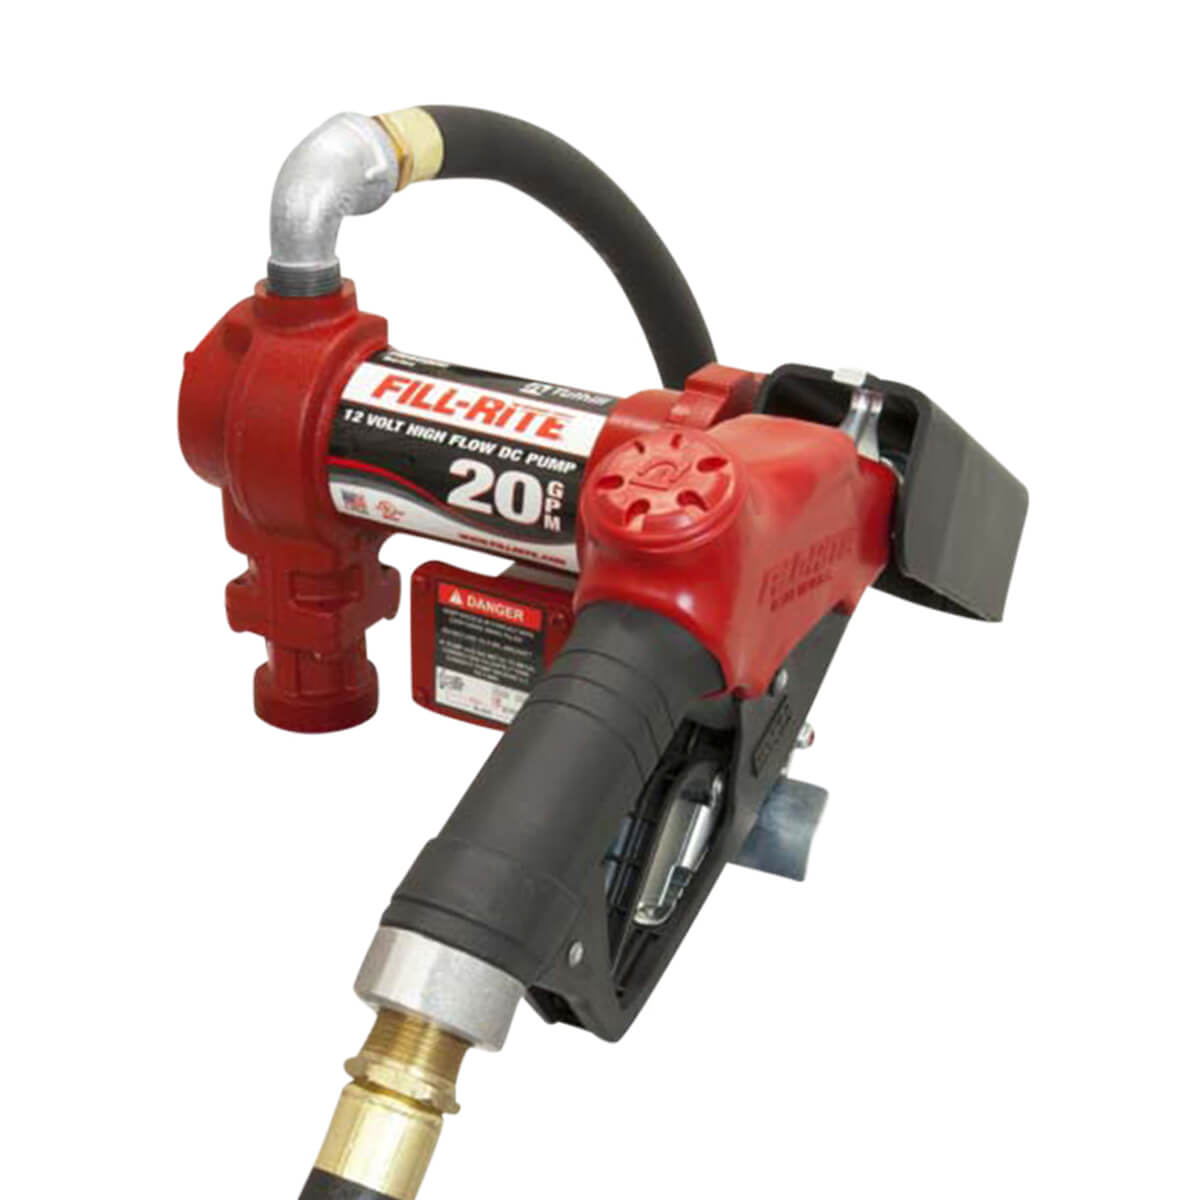 12V DC Hi-Flow Pump with Hose and Ultra Hi-Flo Automatic Nozzle